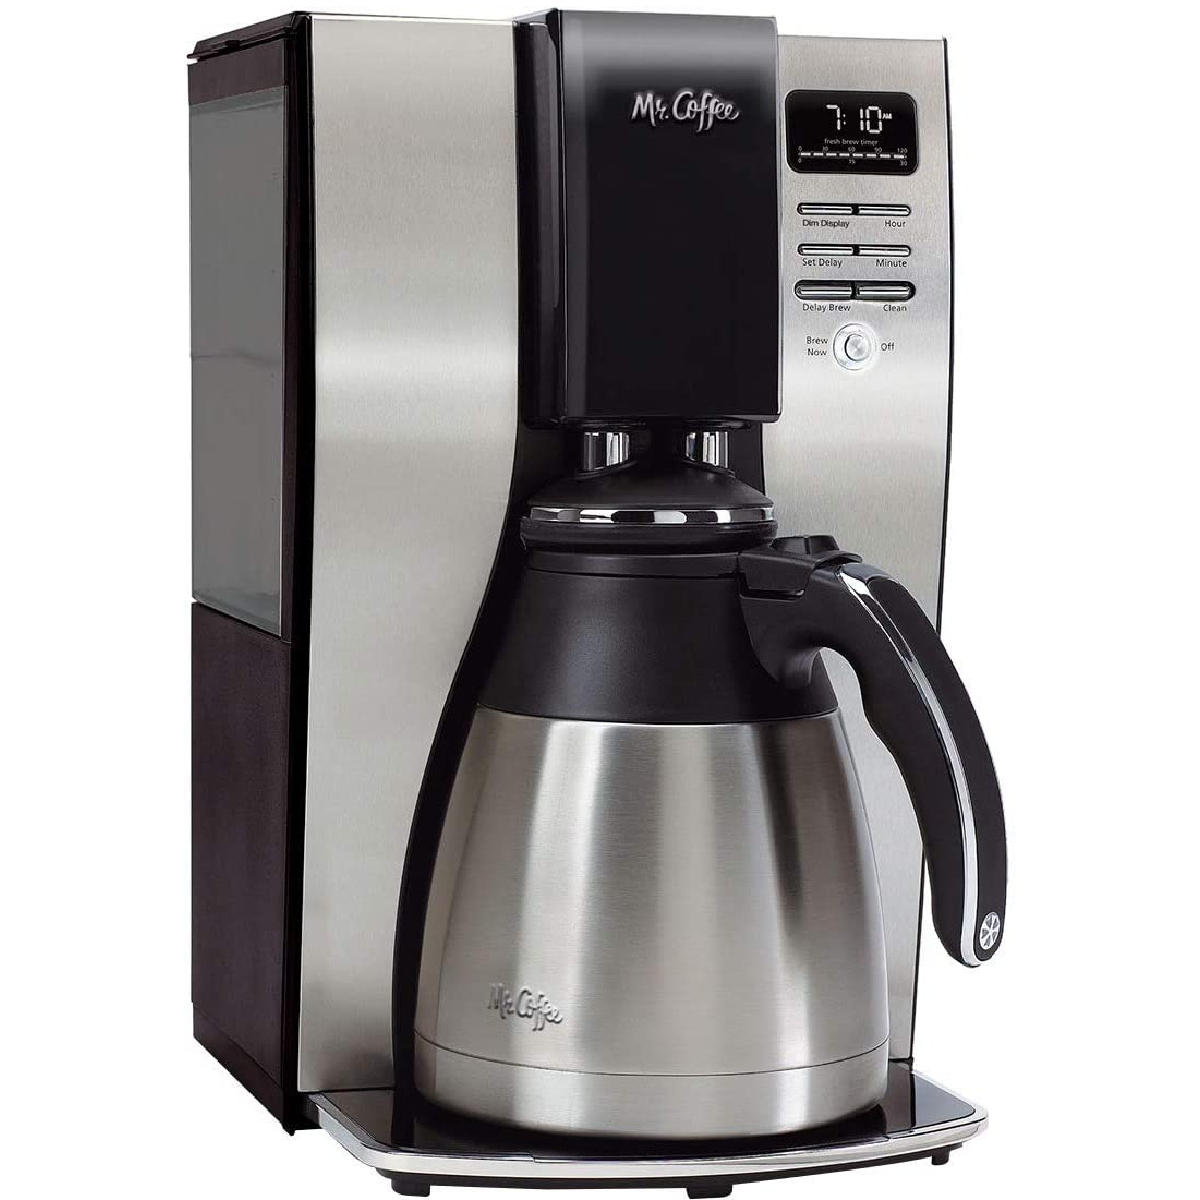 Mr. Coffee 10-Cup Optimal Brew Thermal Coffee Maker